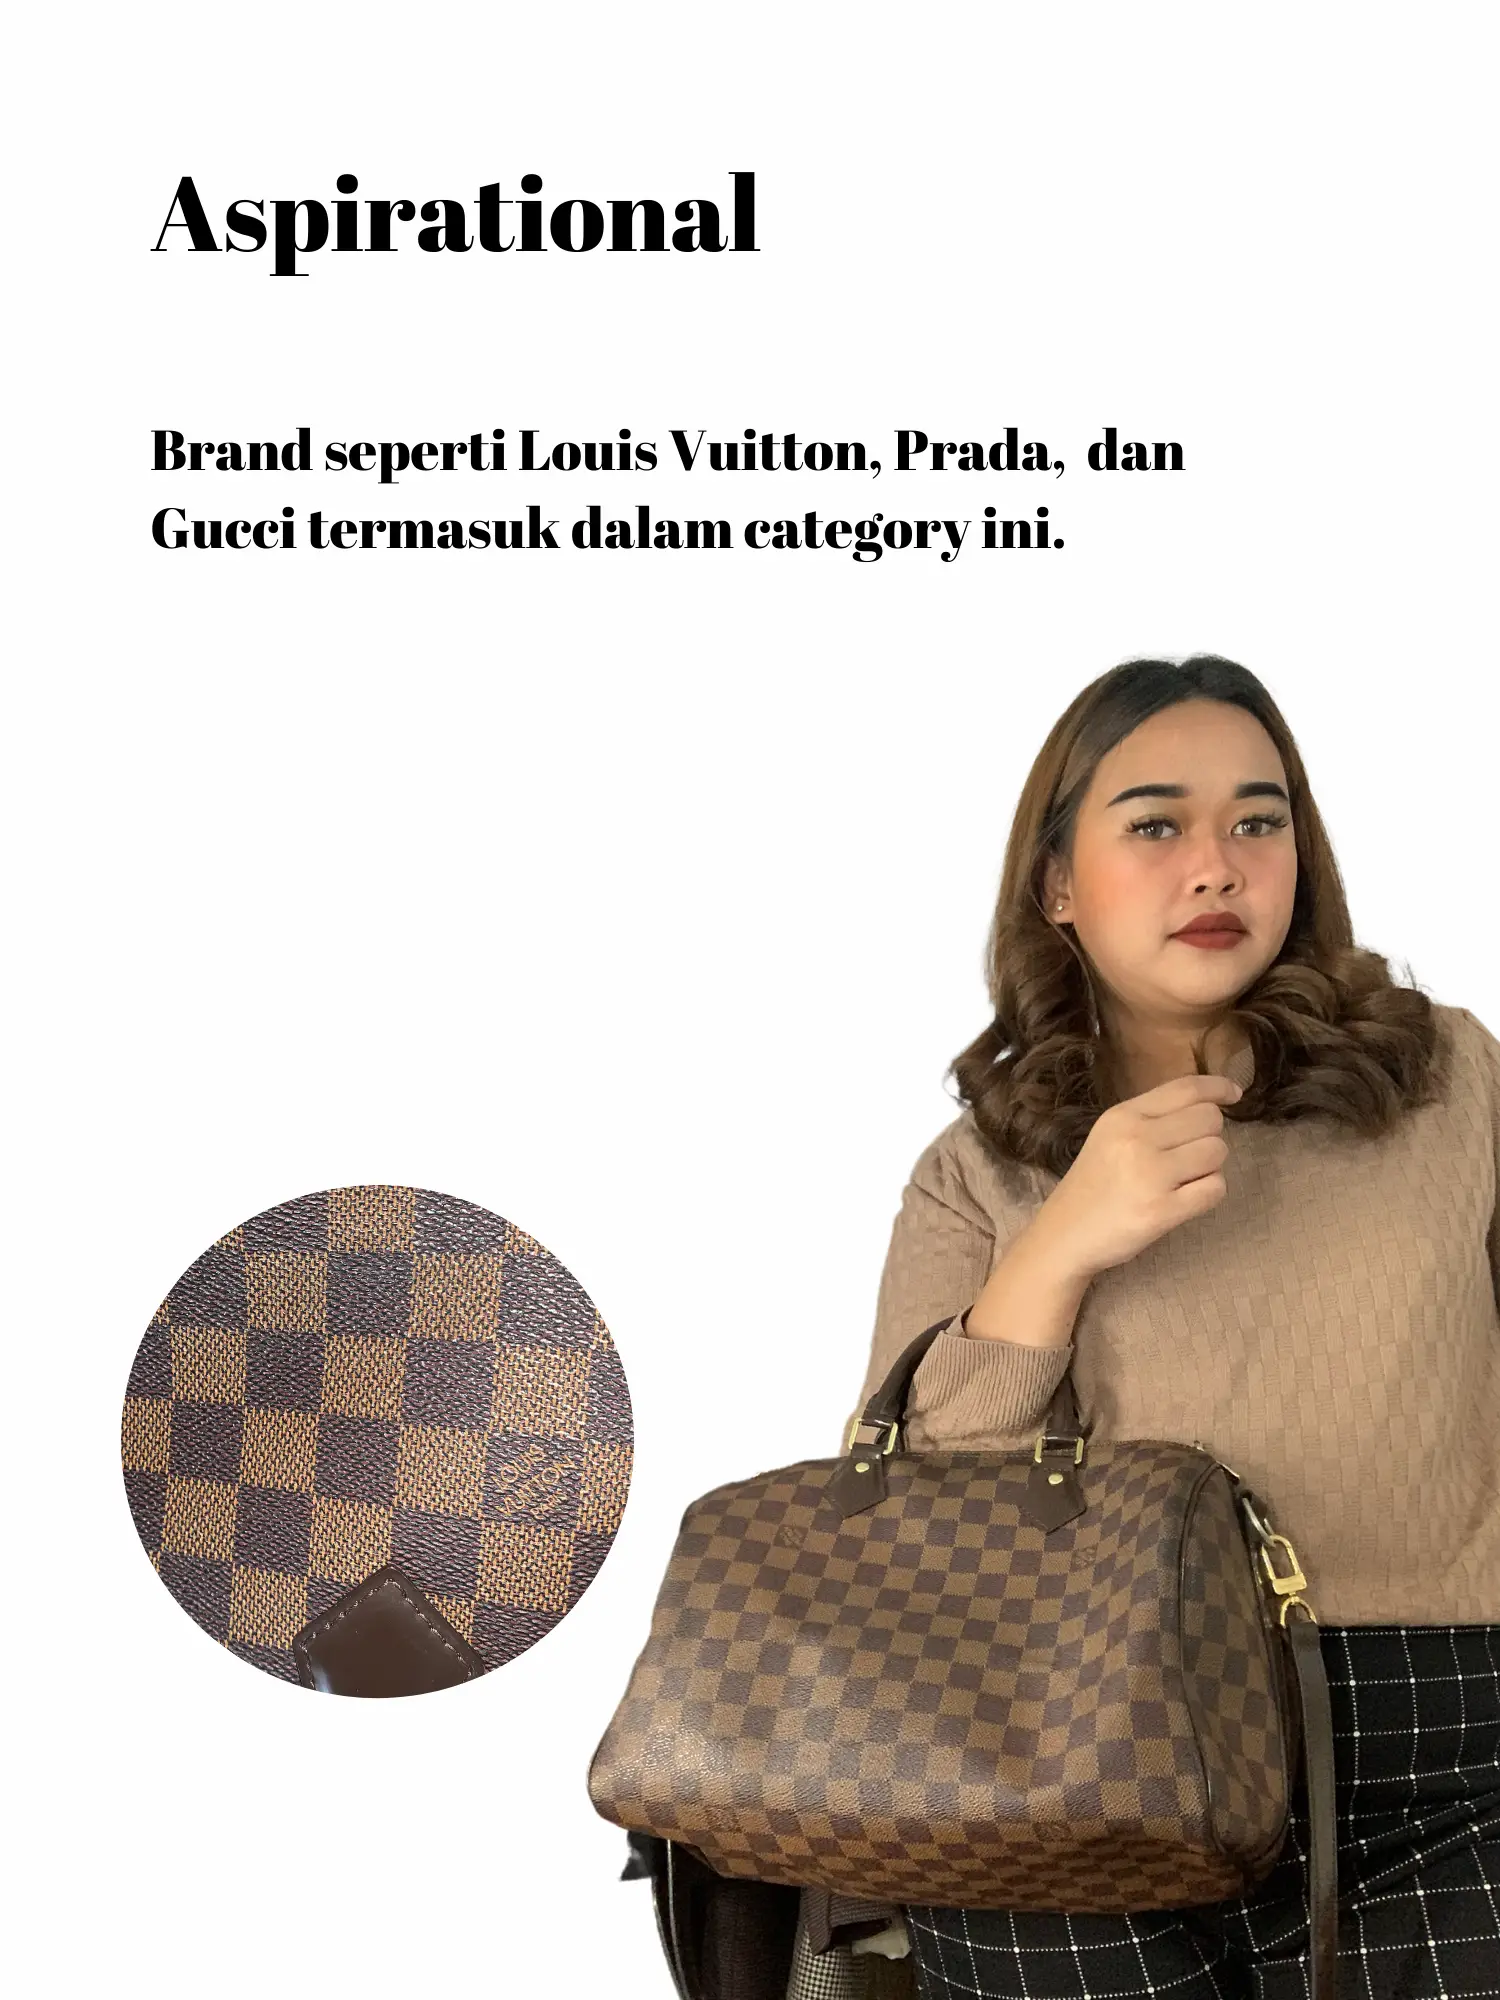 Louis Vuitton Damier Azur Short Wallet Louis Vuitton Kuala Lumpur